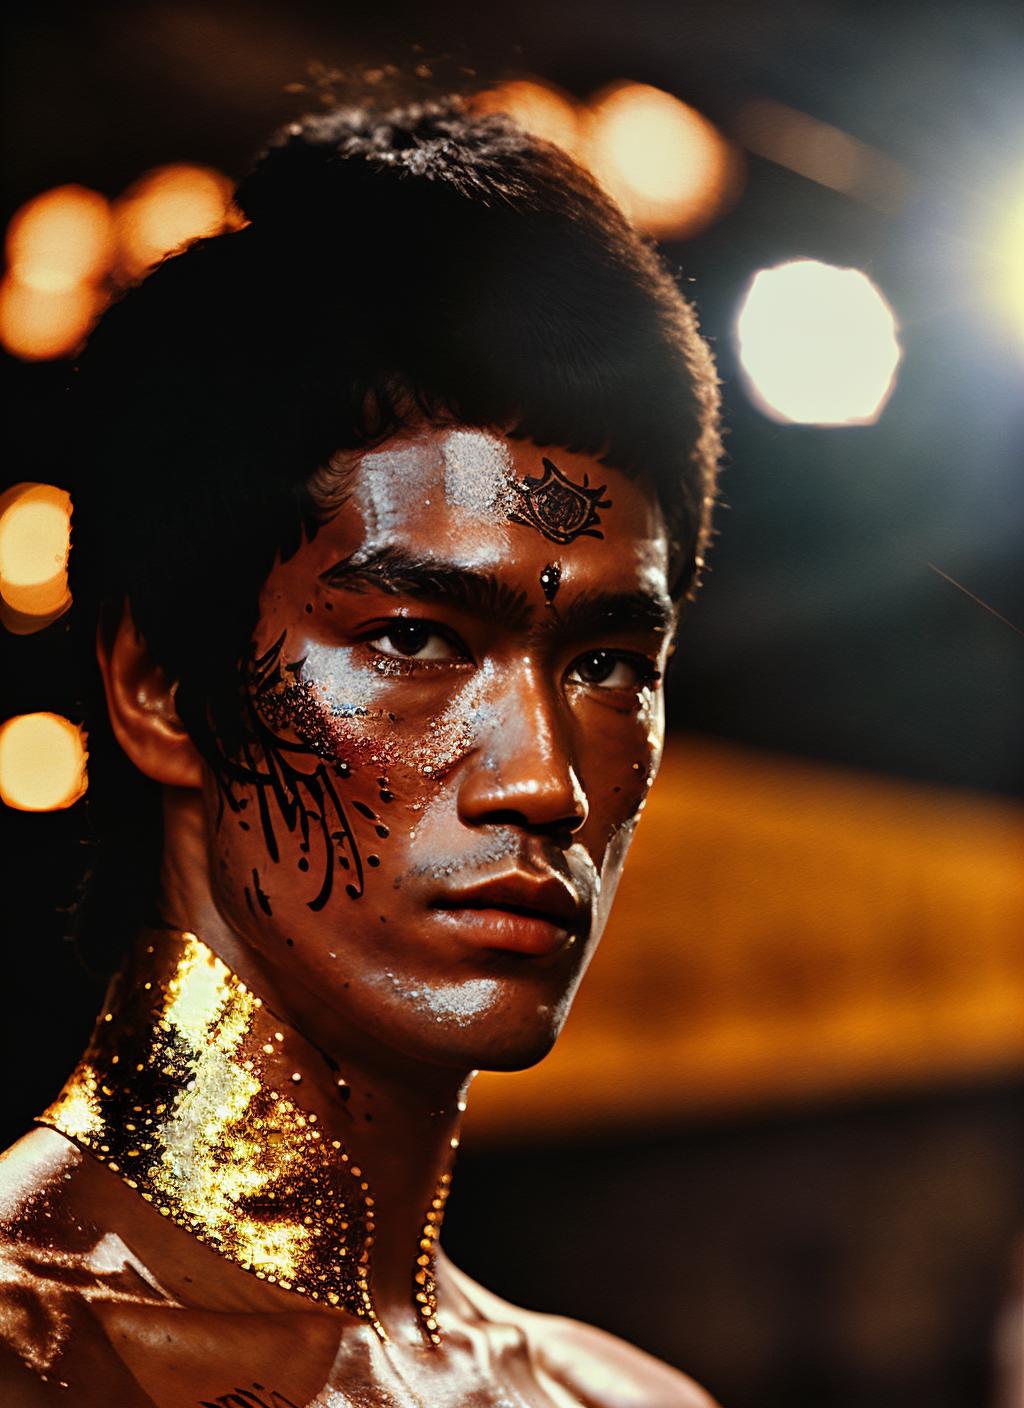 Bruce Lee image by malcolmrey